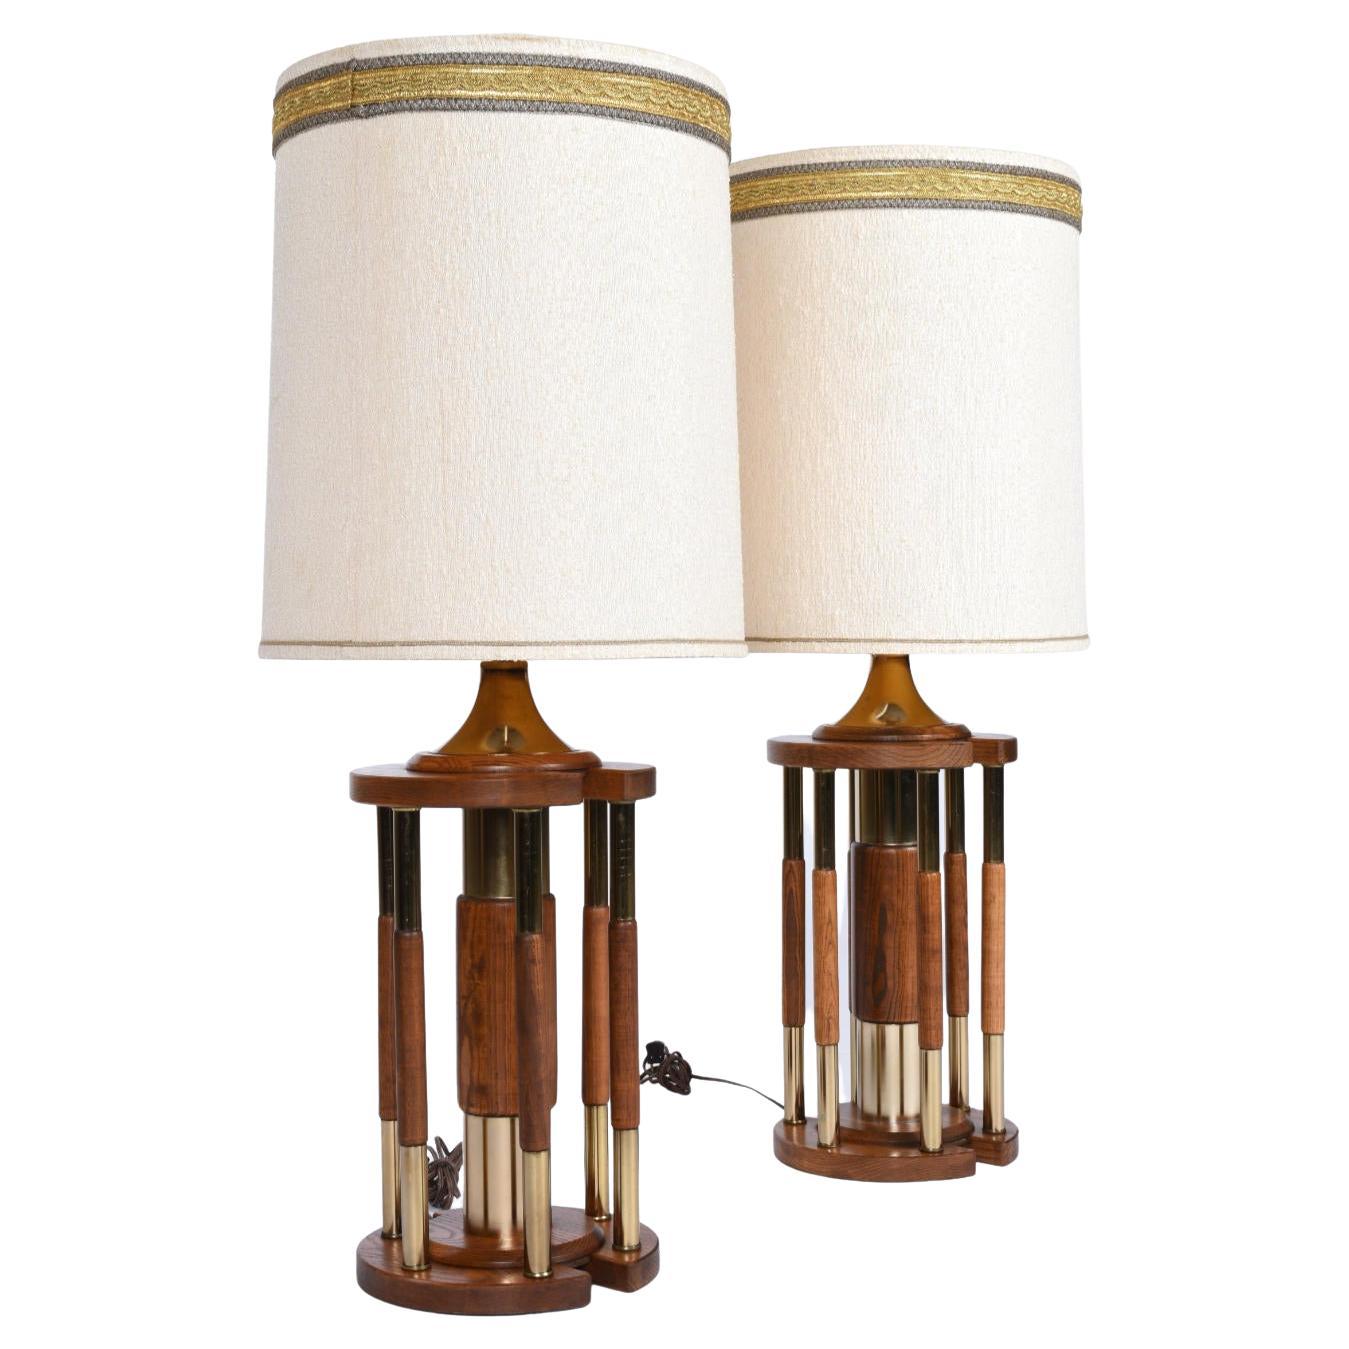 Solid Oak Brass Pillar Rotunda Table Lamps, circa 1970s For Sale